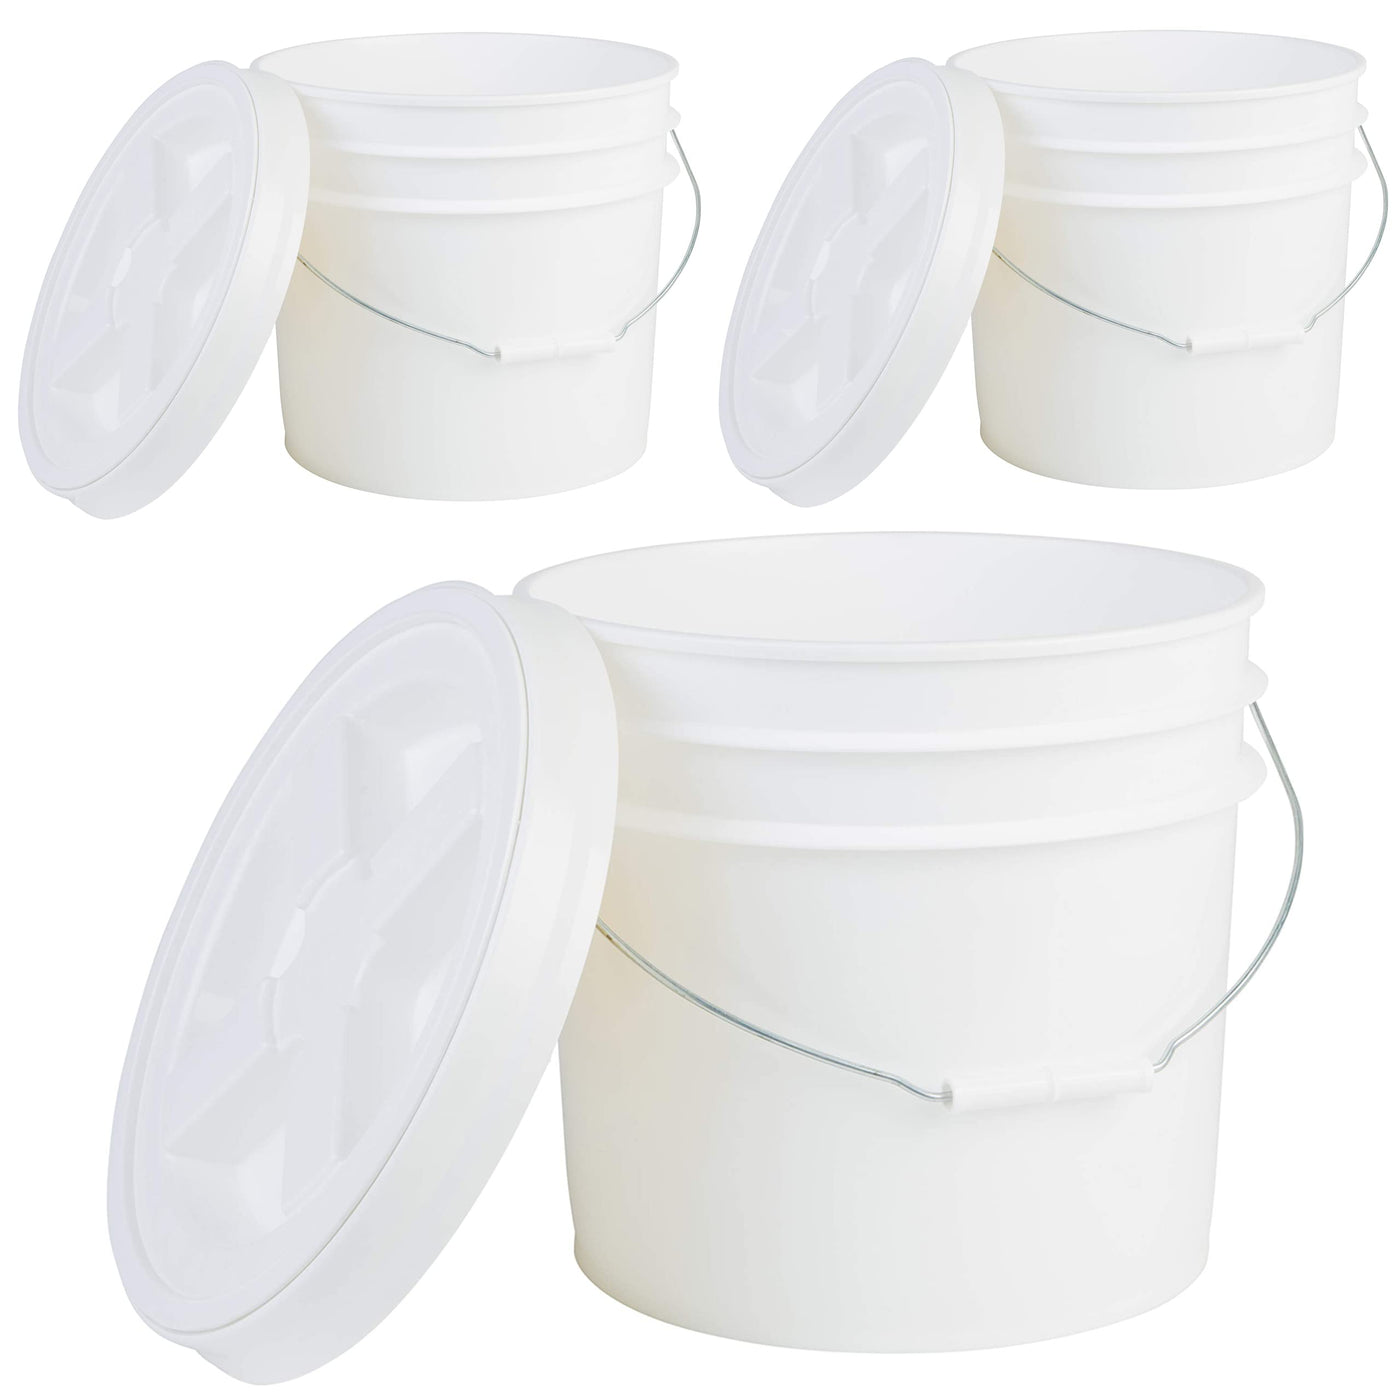 3.5 Gallon API White Bucket with Gamma Seal Lid (white)